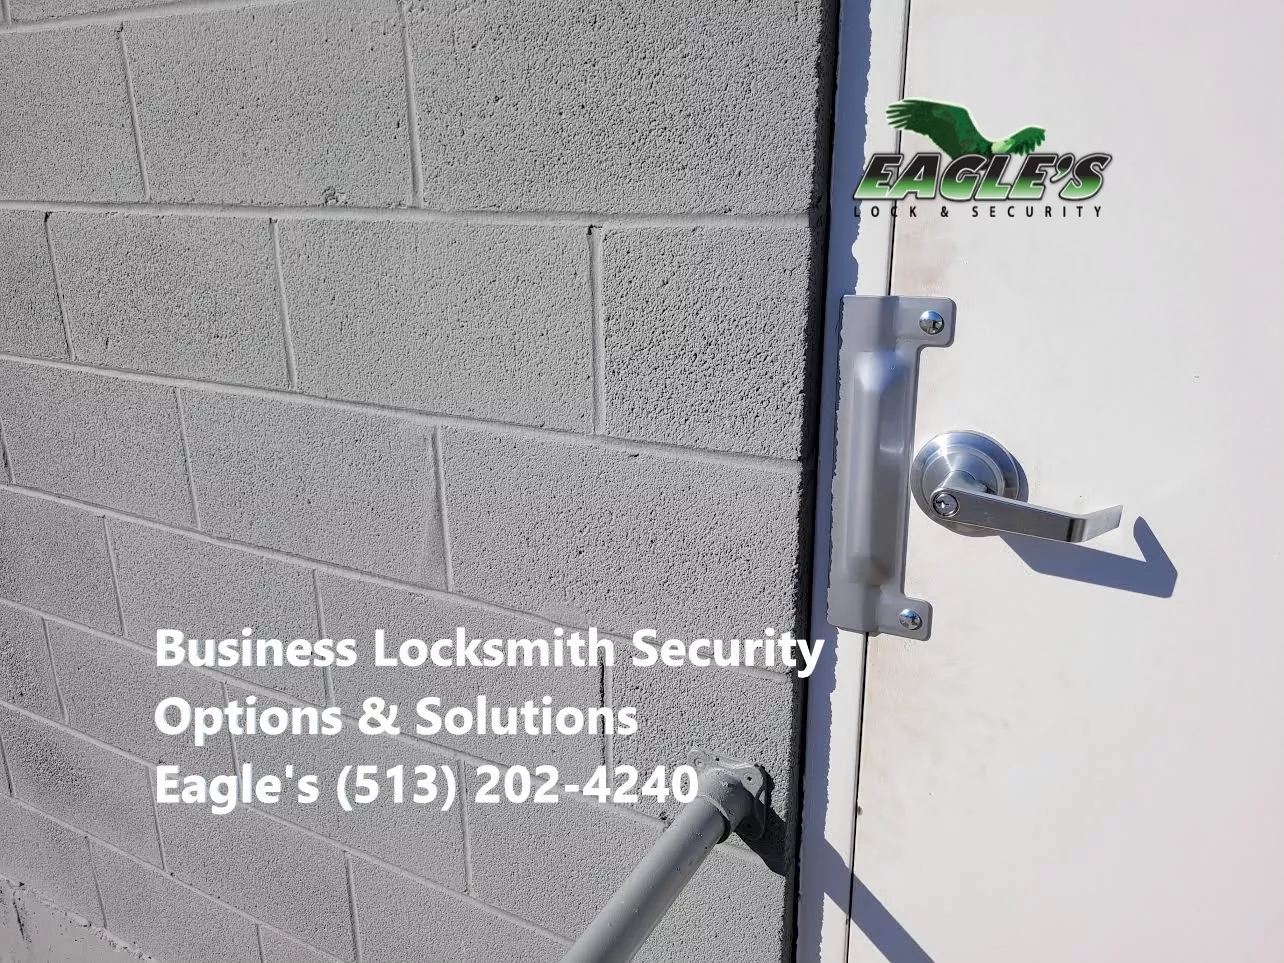 Business Locksmith Security Options